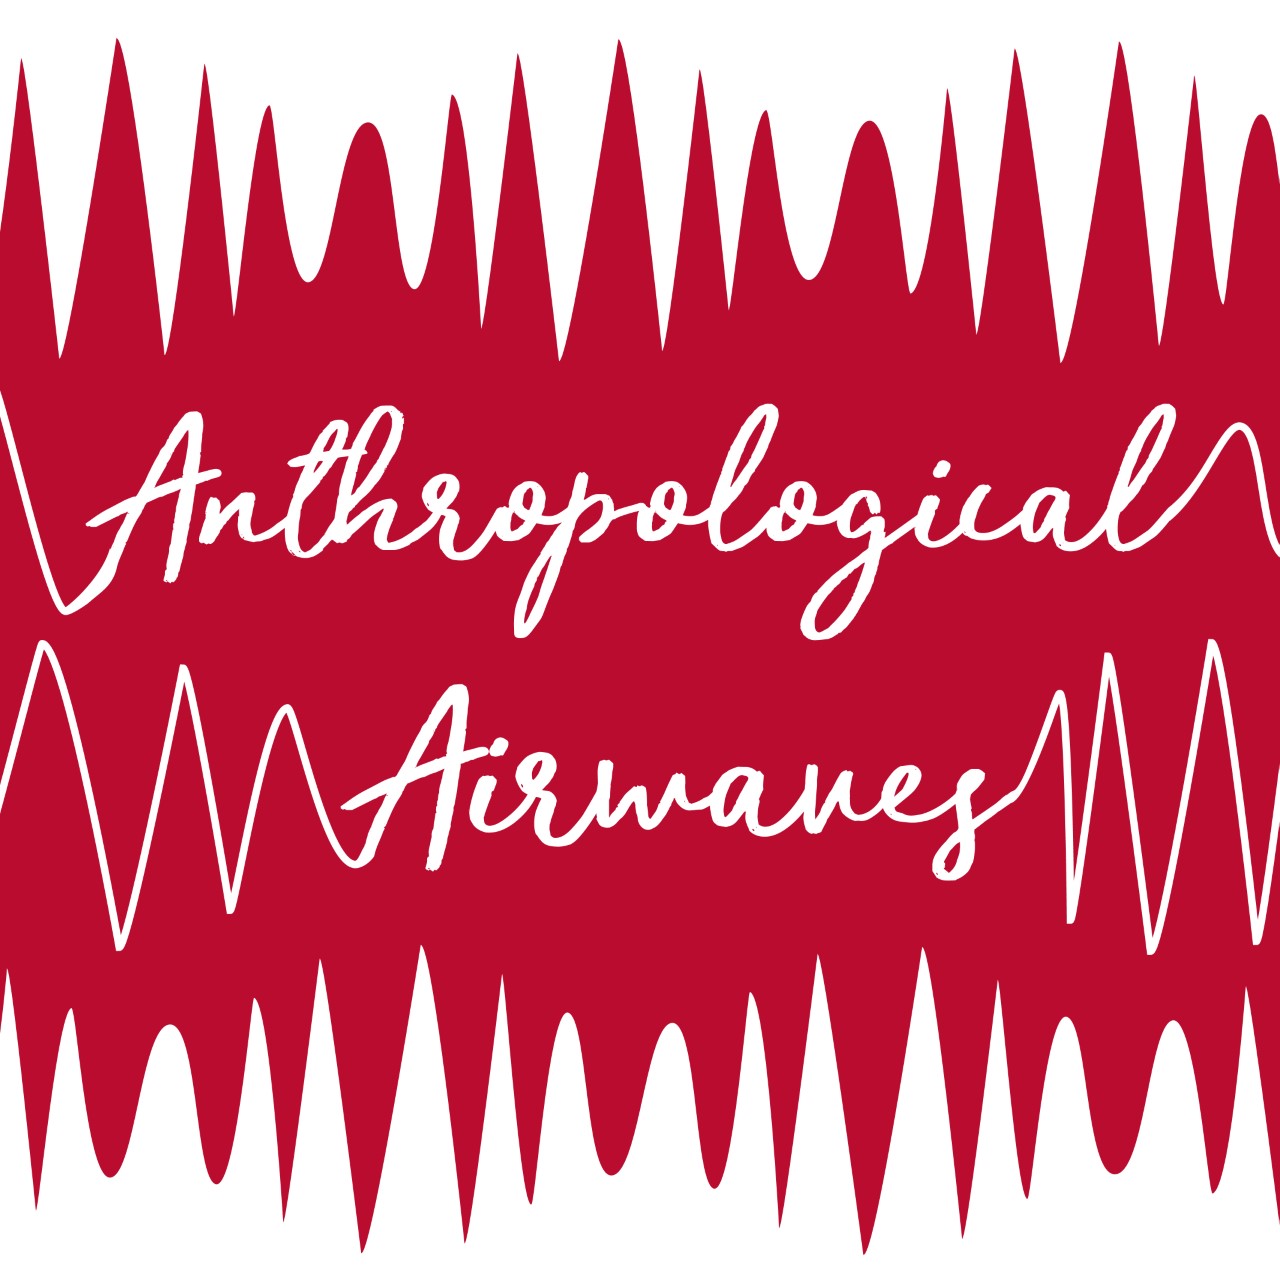 Anthropological airwaves podcast logo